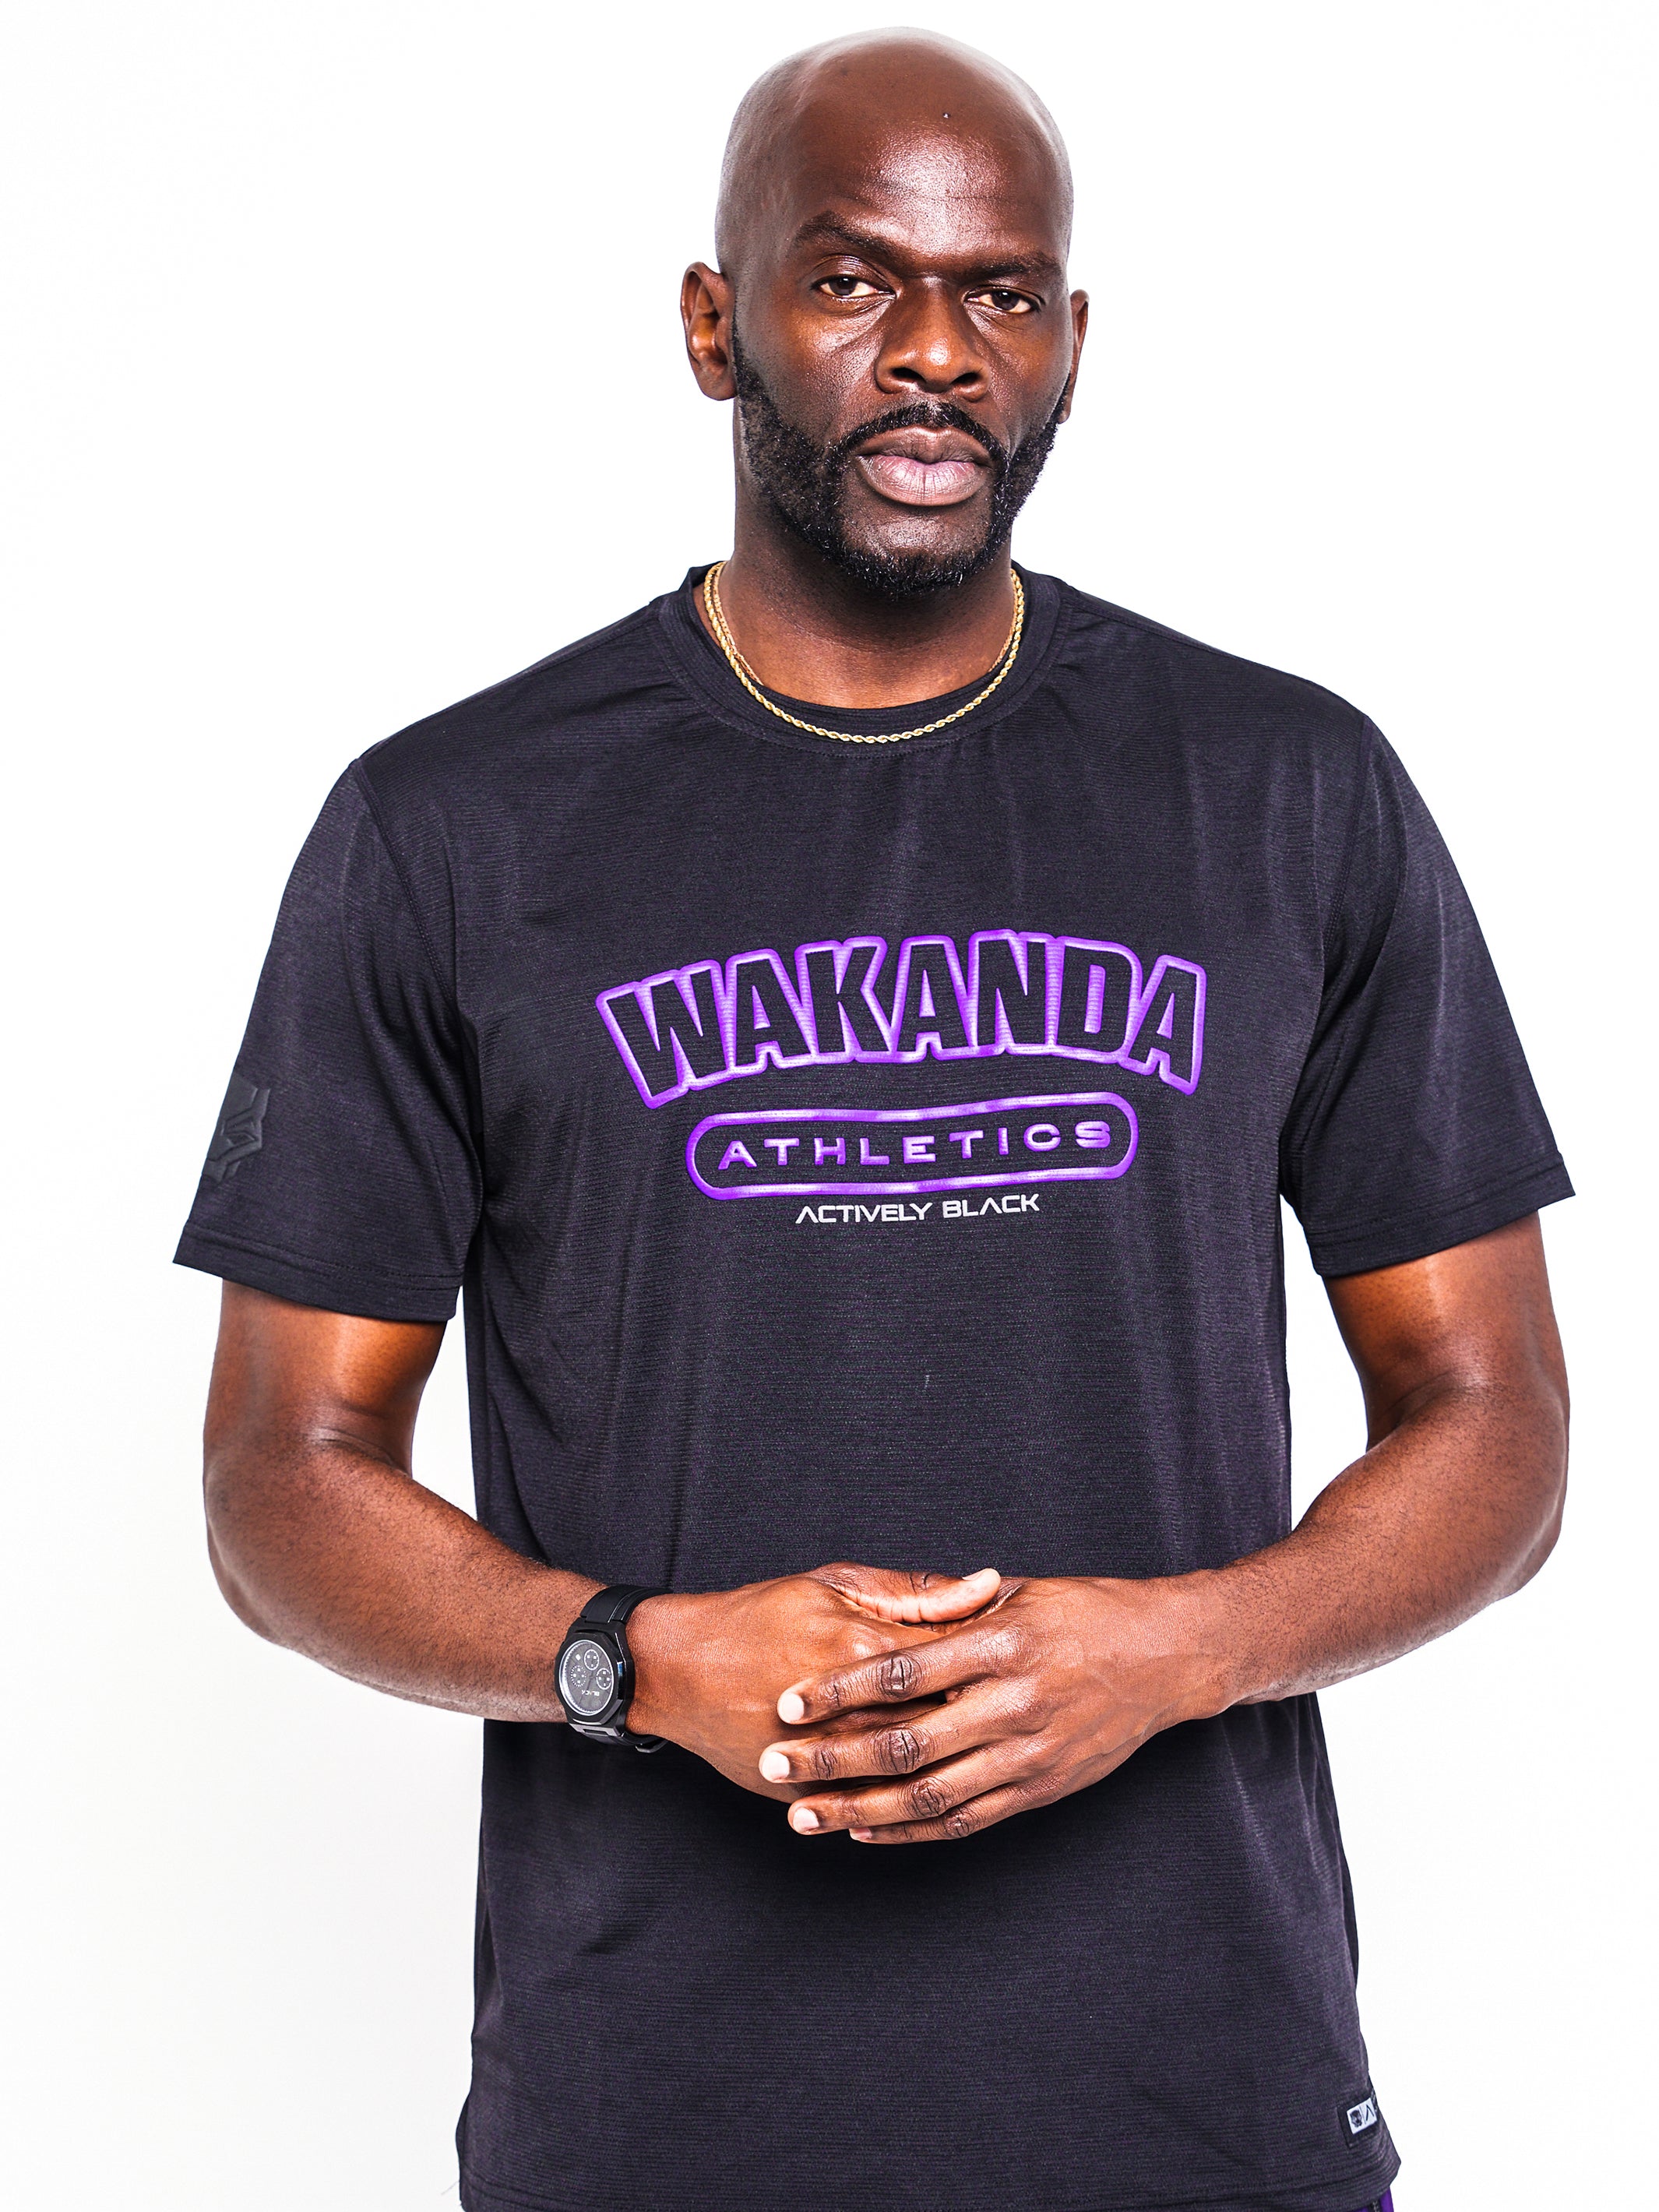 Men's Wakanda Athletics Shirt